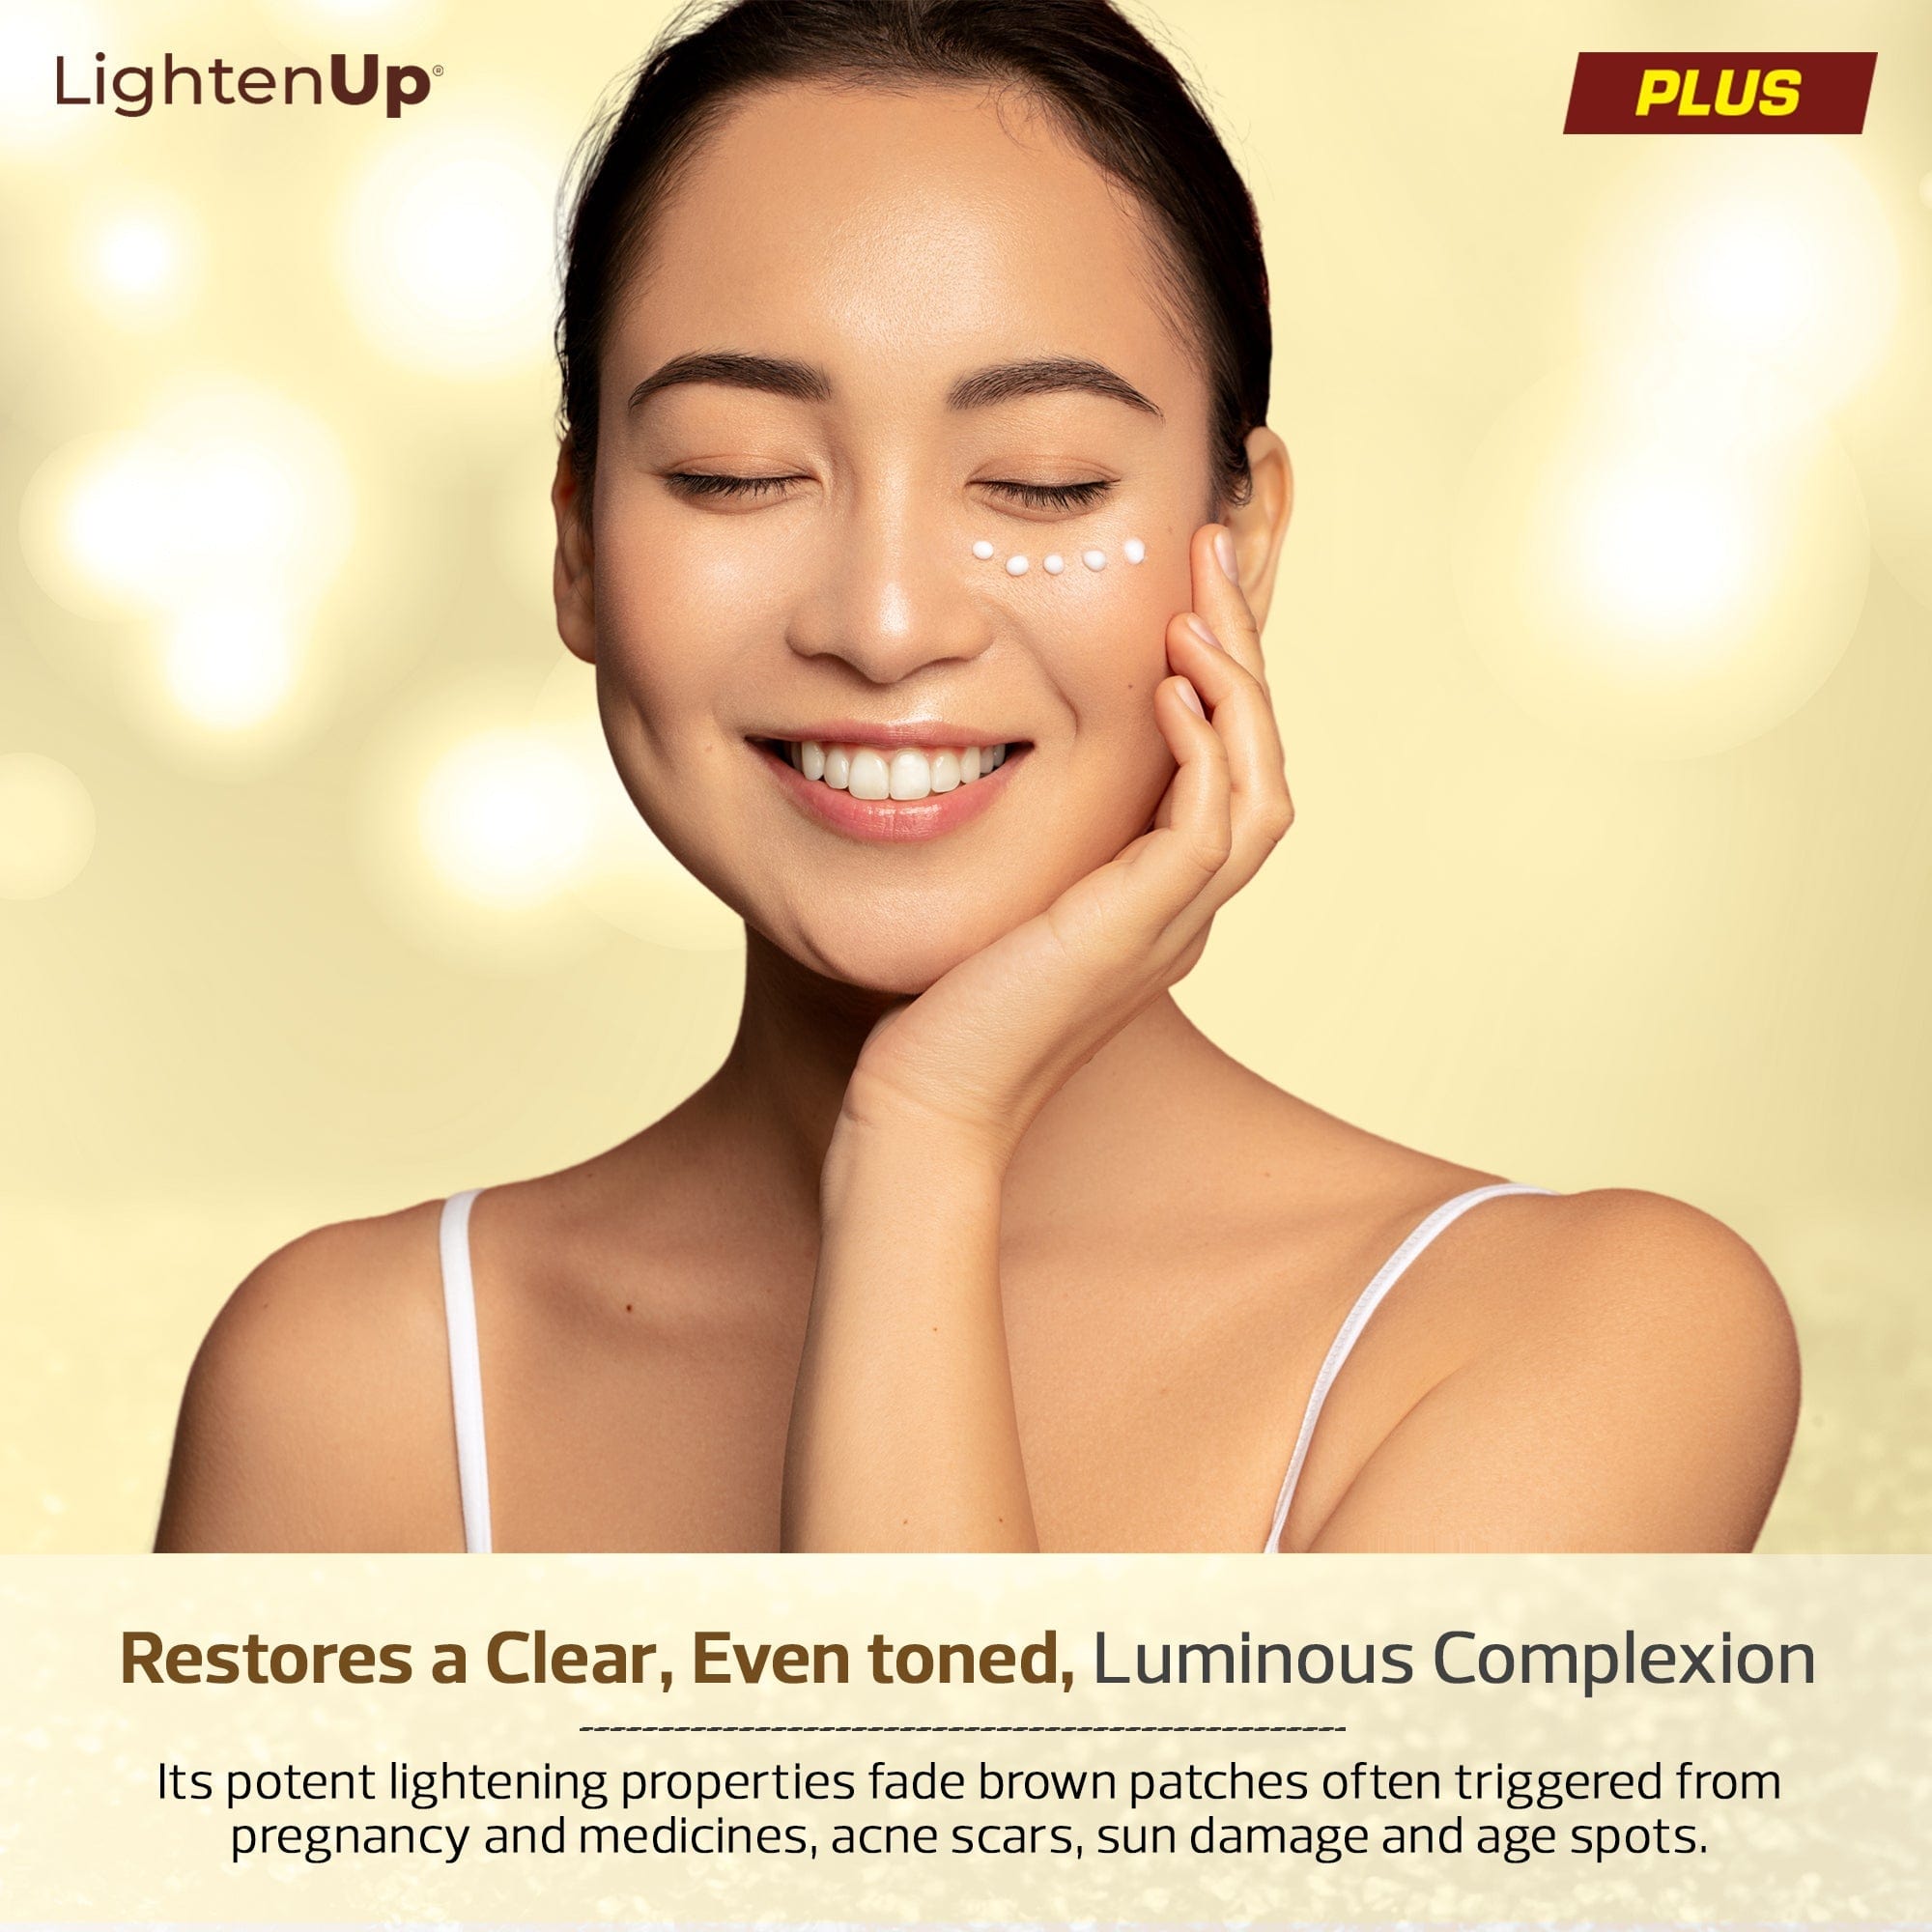 Omic LightenUp PLUS Lightening Gel - 30ml LightenUp - Mitchell Brands - Skin Lightening, Skin Brightening, Fade Dark Spots, Shea Butter, Hair Growth Products